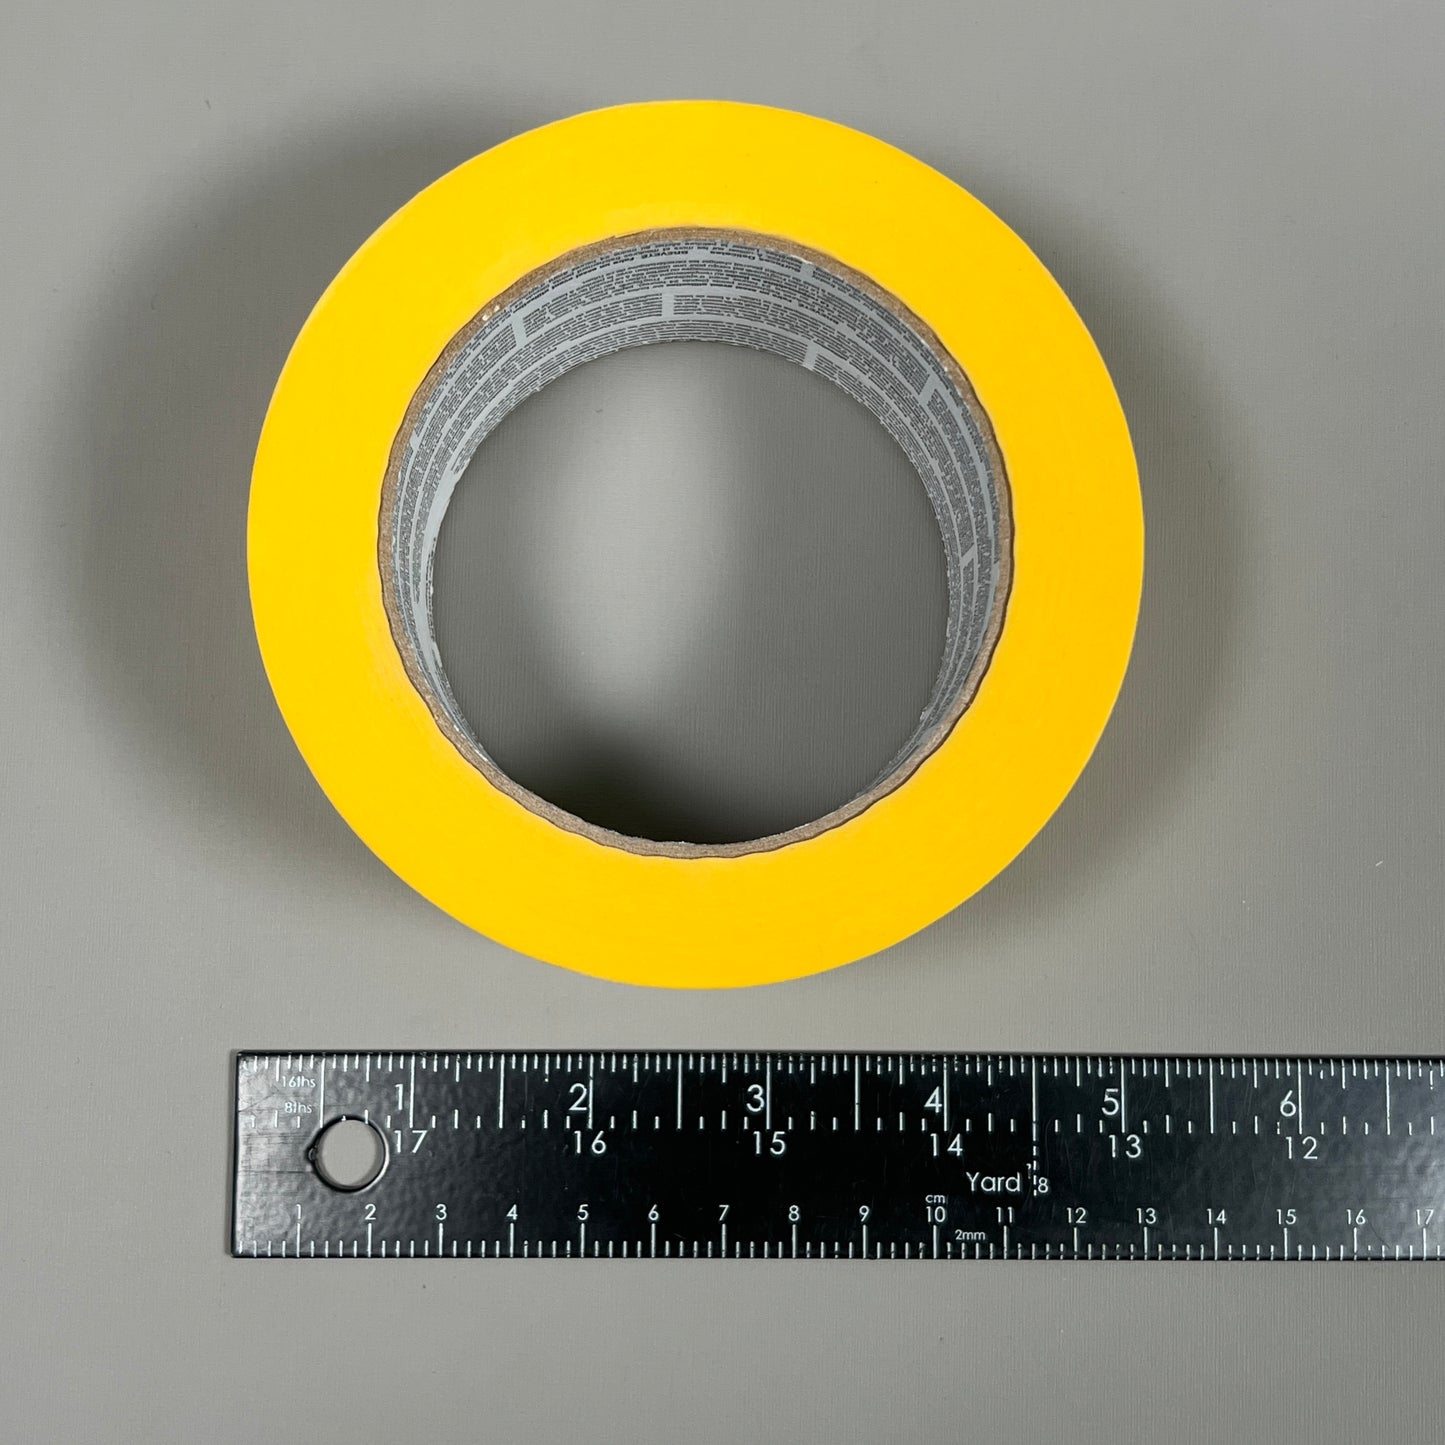 2-PK SHURTAPE FROGTAPE Multi-Surface Masking Tape Yellow 1.88 in x 60 yd 334561 (New)